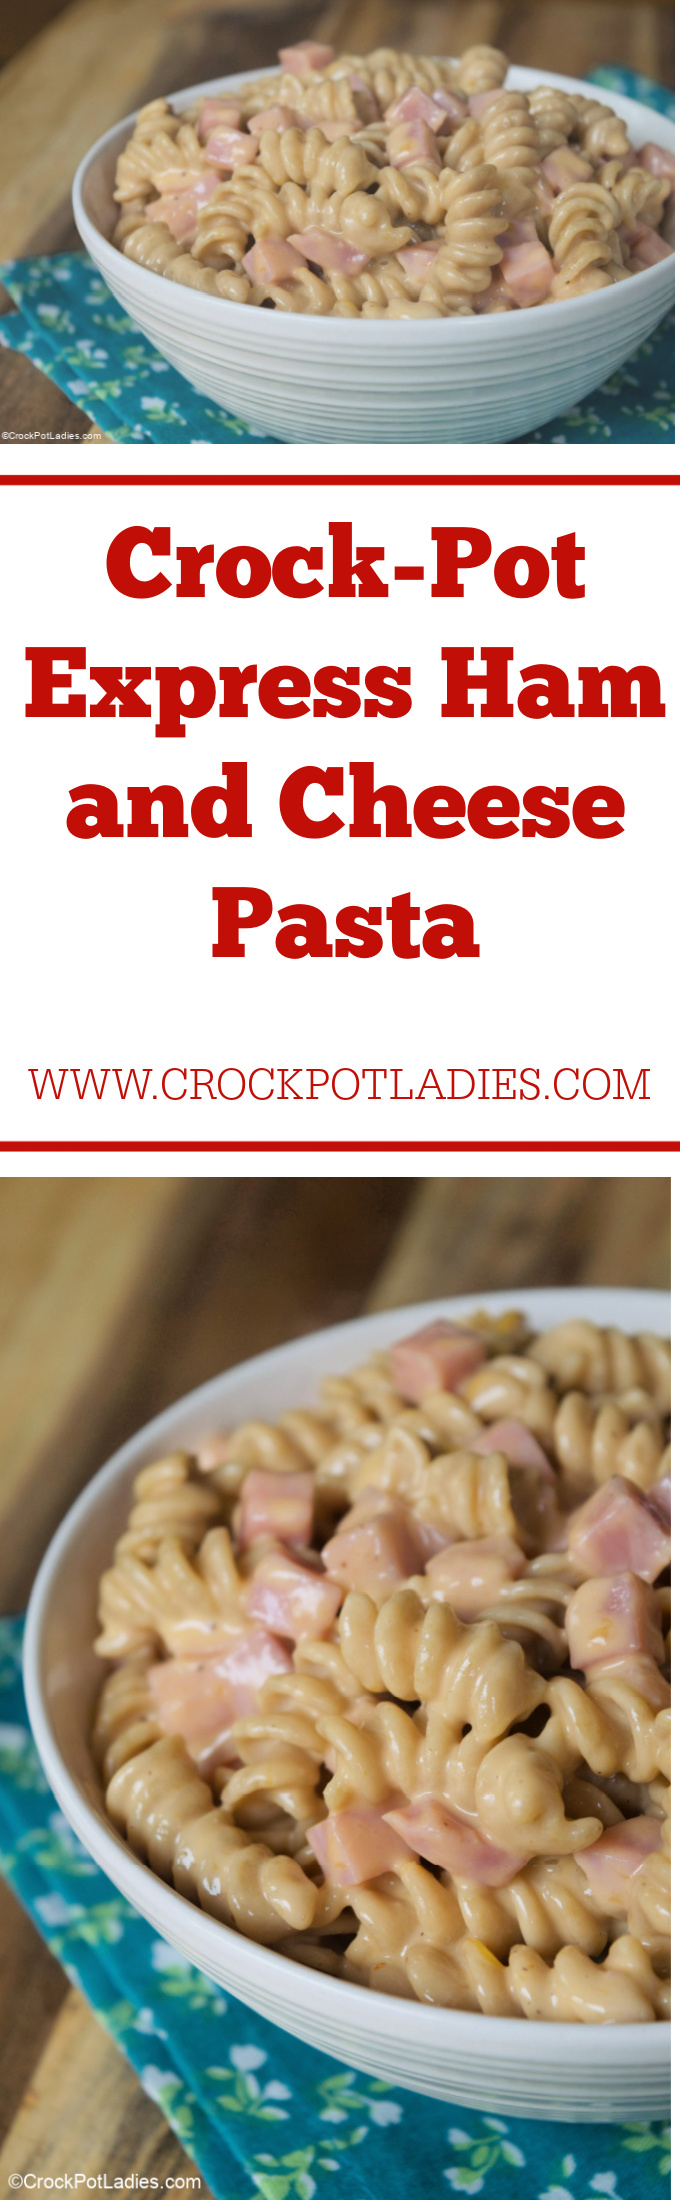 Crock-Pot Express Ham and Cheese Pasta